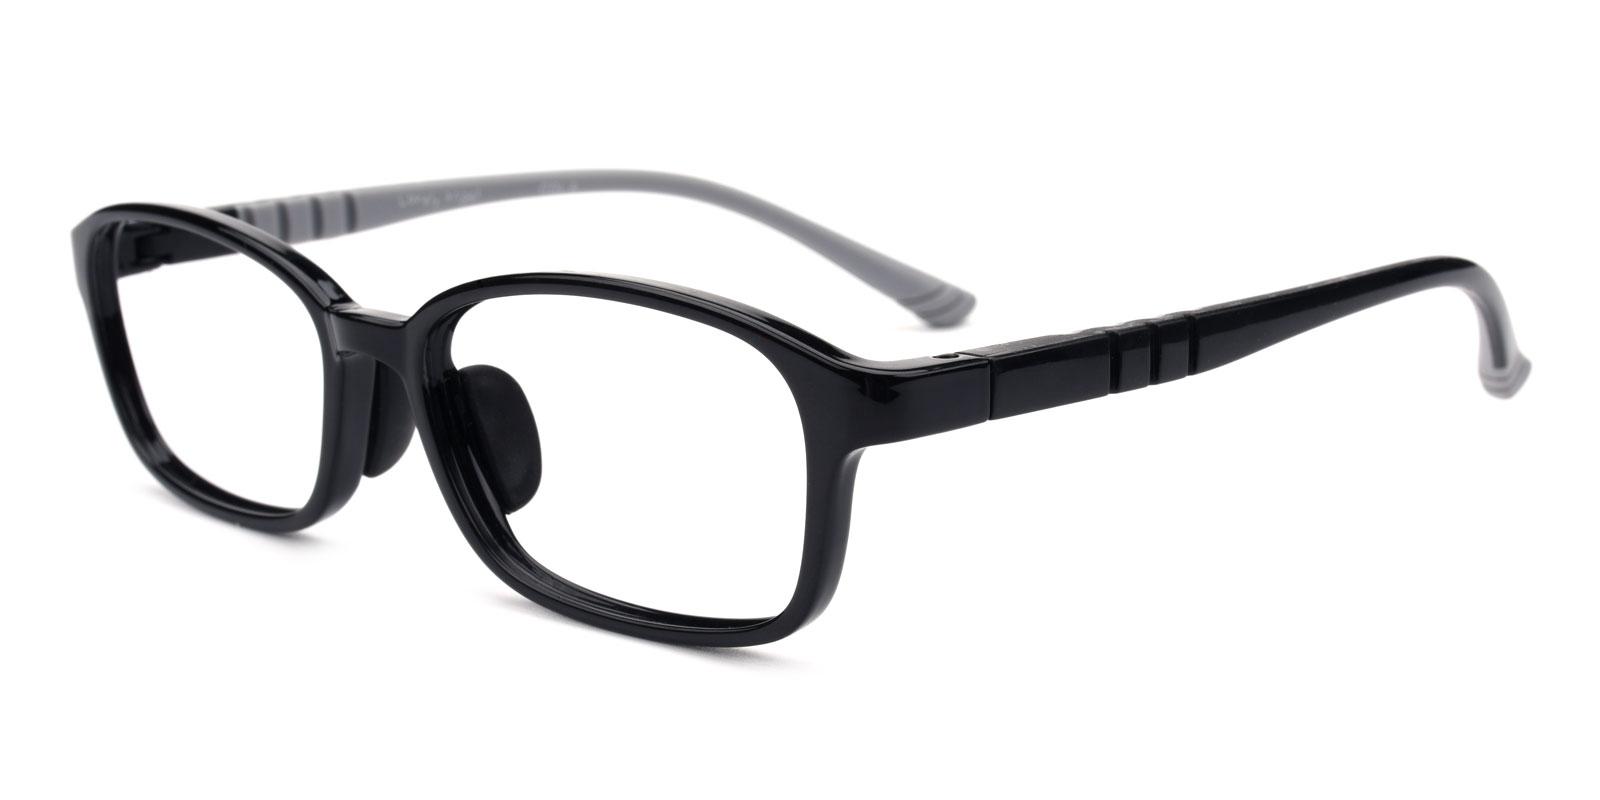 Adward-Black-Rectangle-Combination-Eyeglasses-detail